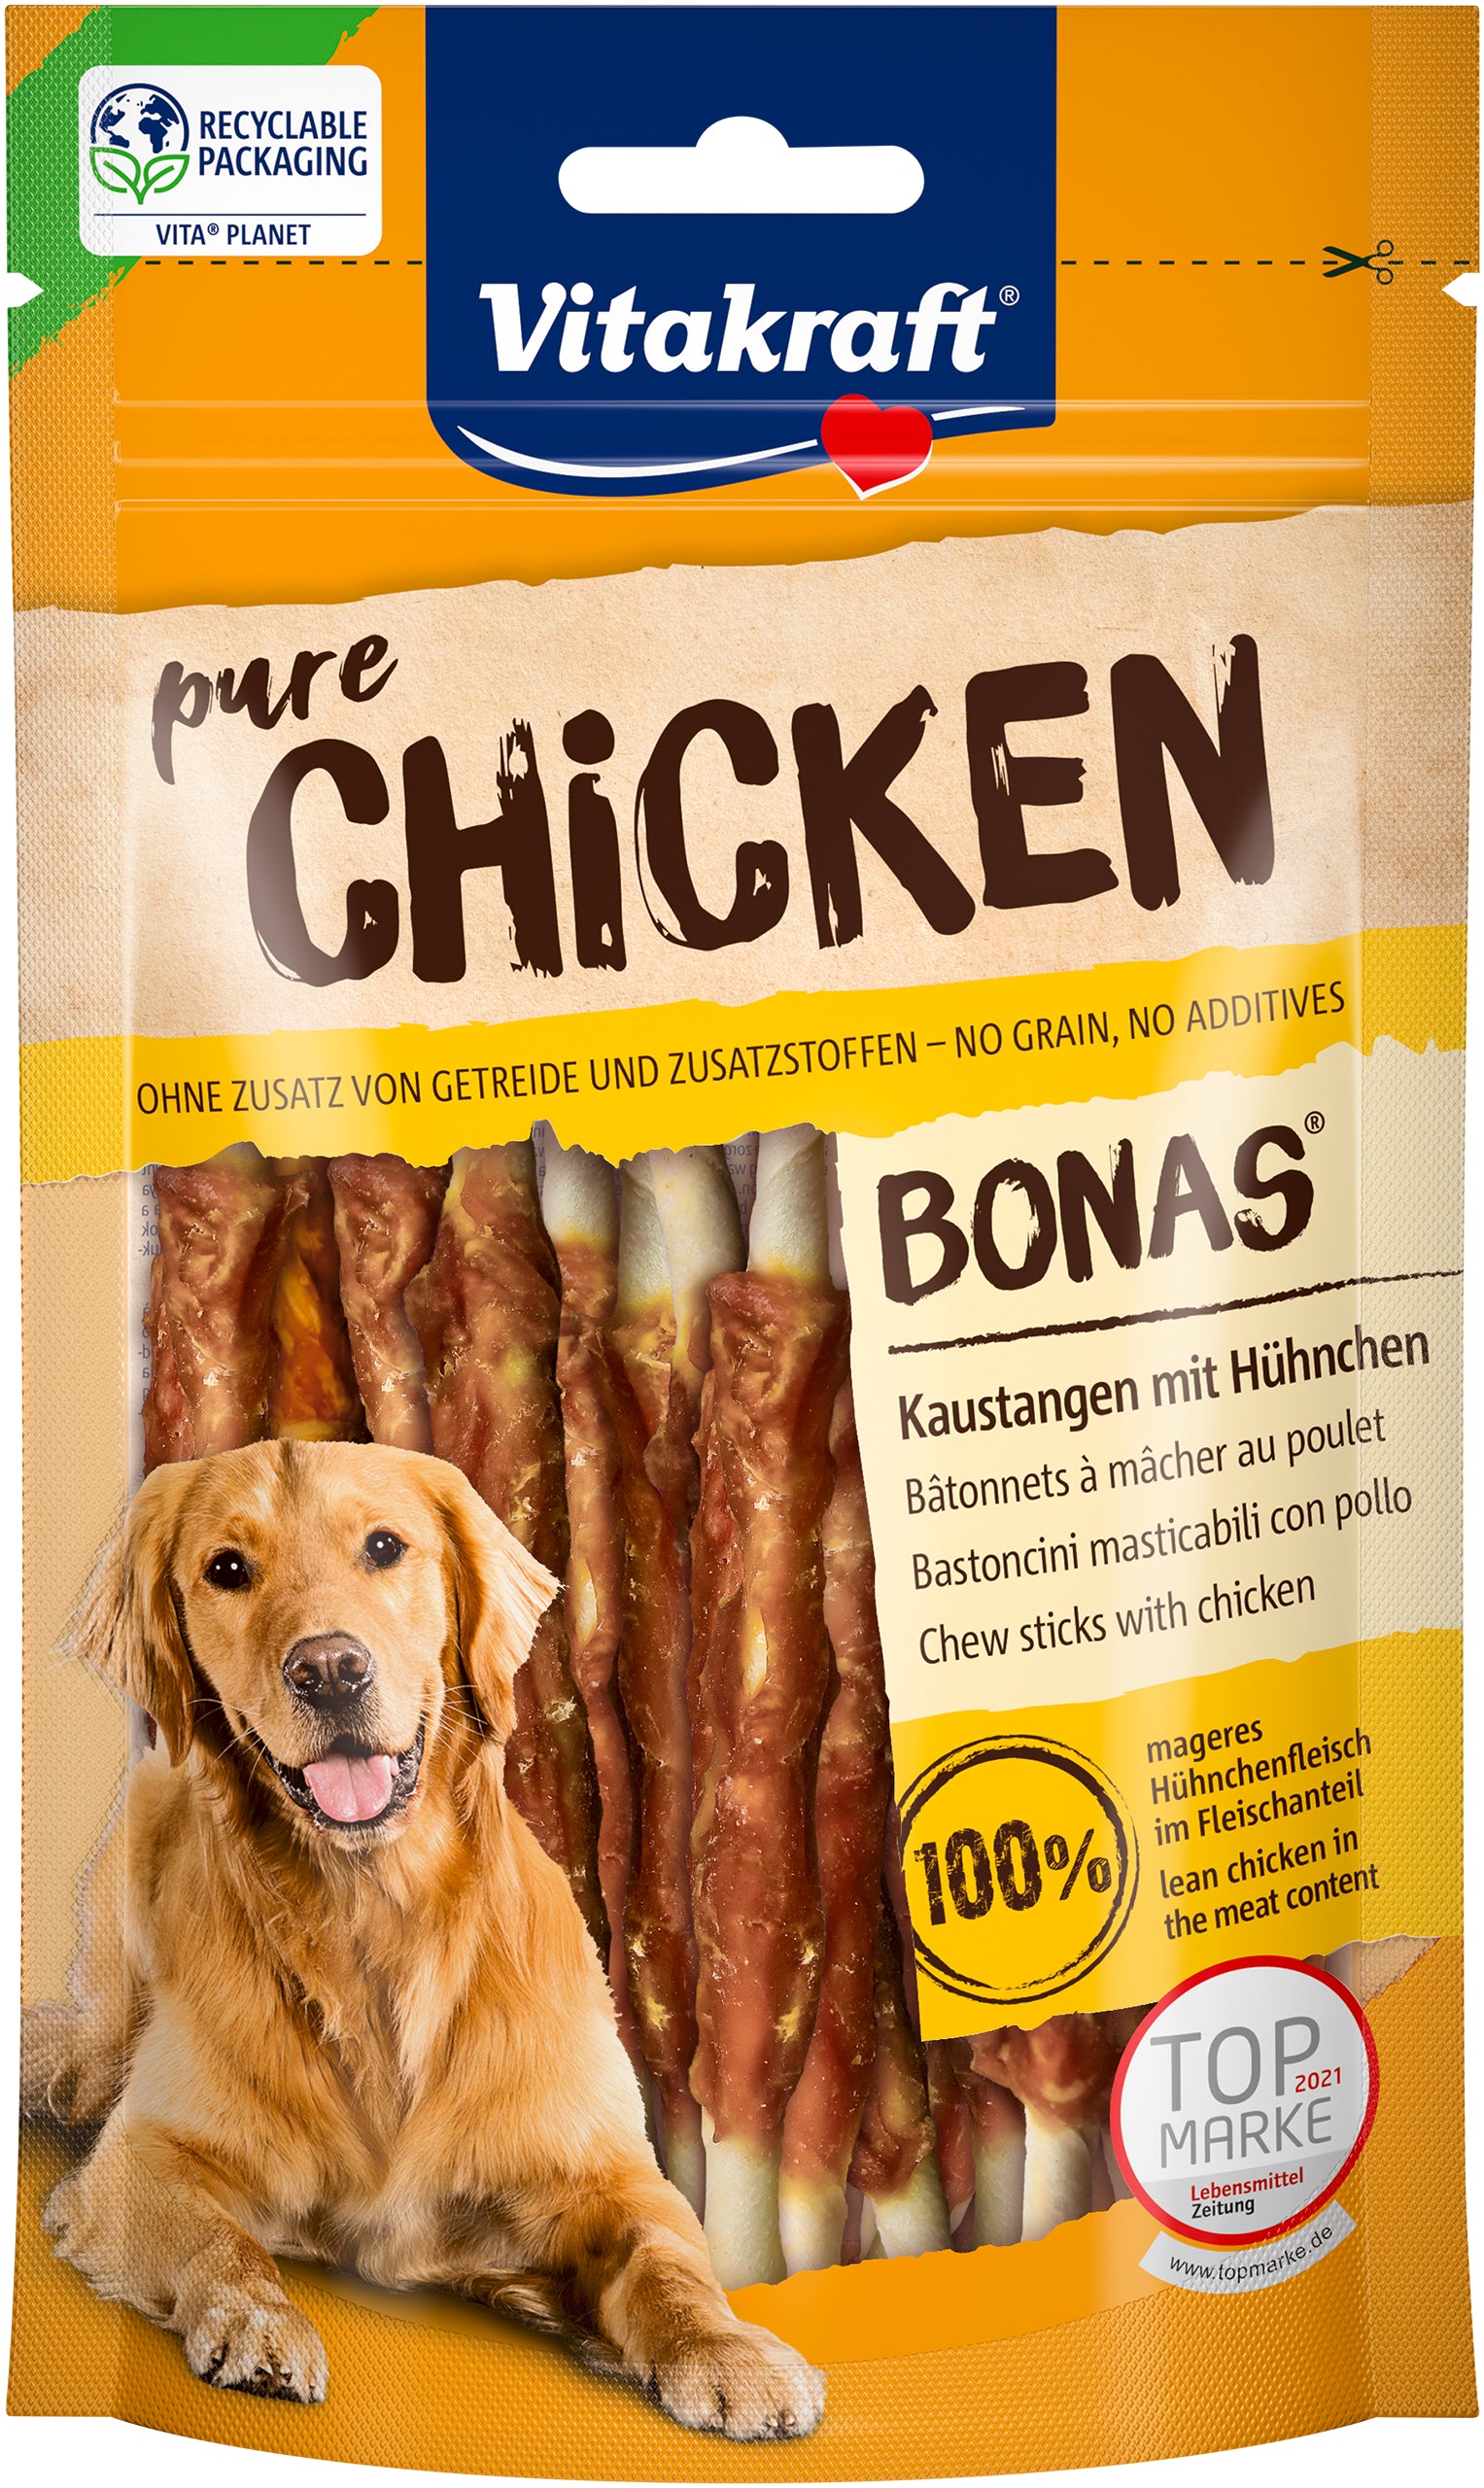 Se Vitakraft - Vitakraft Chicken Bonas Tyggepinde m. Kylling 80g - Dog Treats hos Petpower.dk